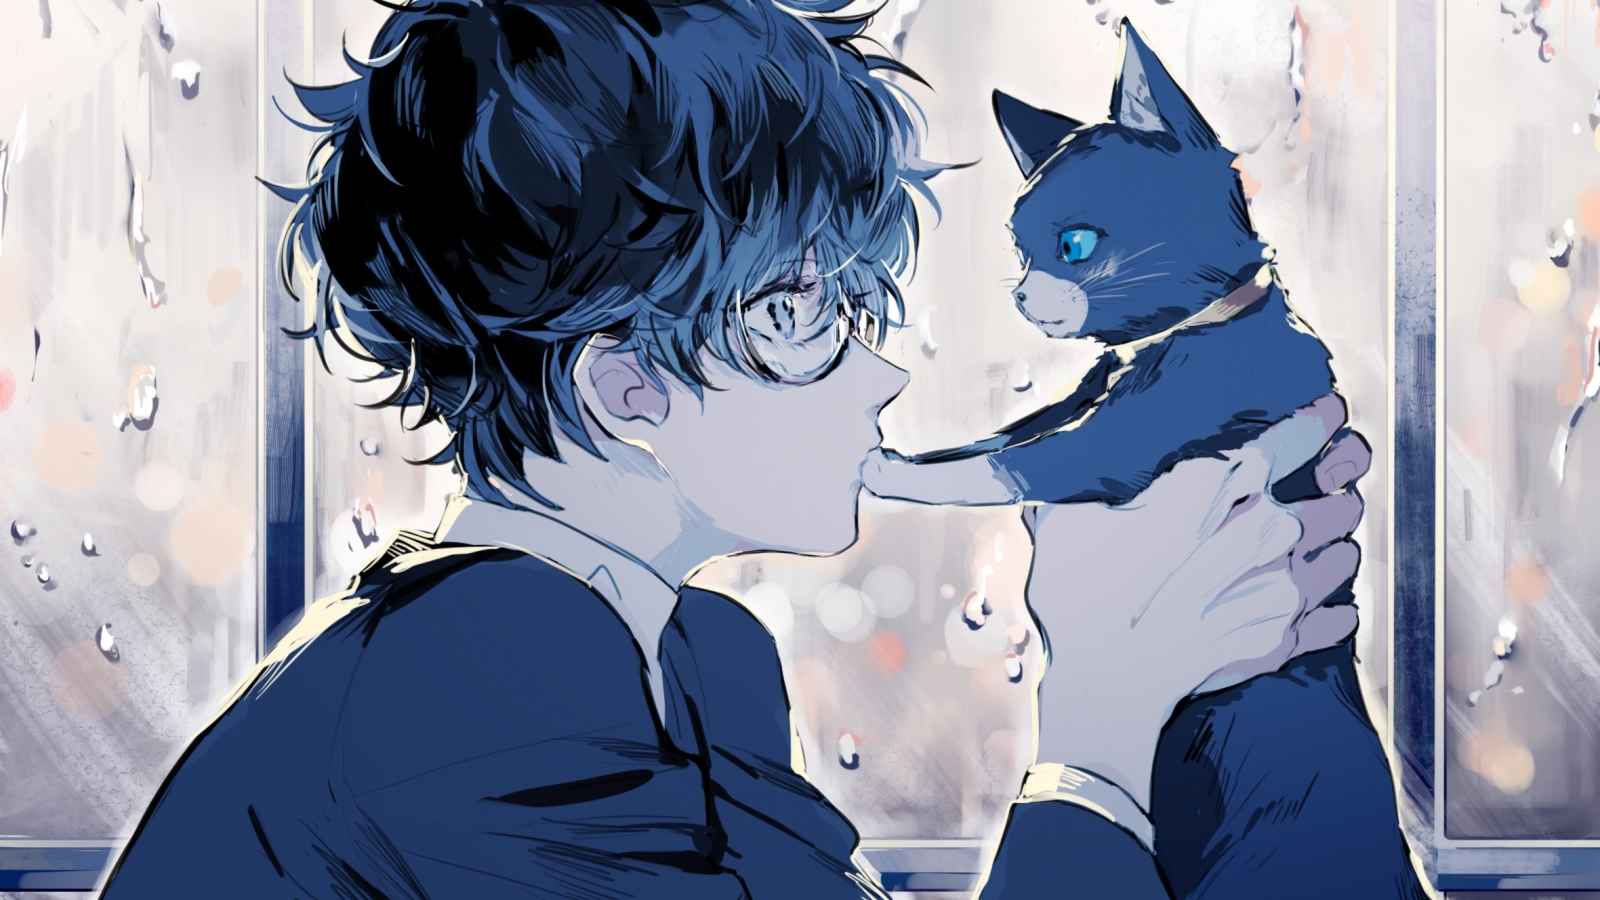 Wallpaper Profile View, Anime Boy, Kurusu Akira, Cute, Persona Cat, Glasses:2361x1824